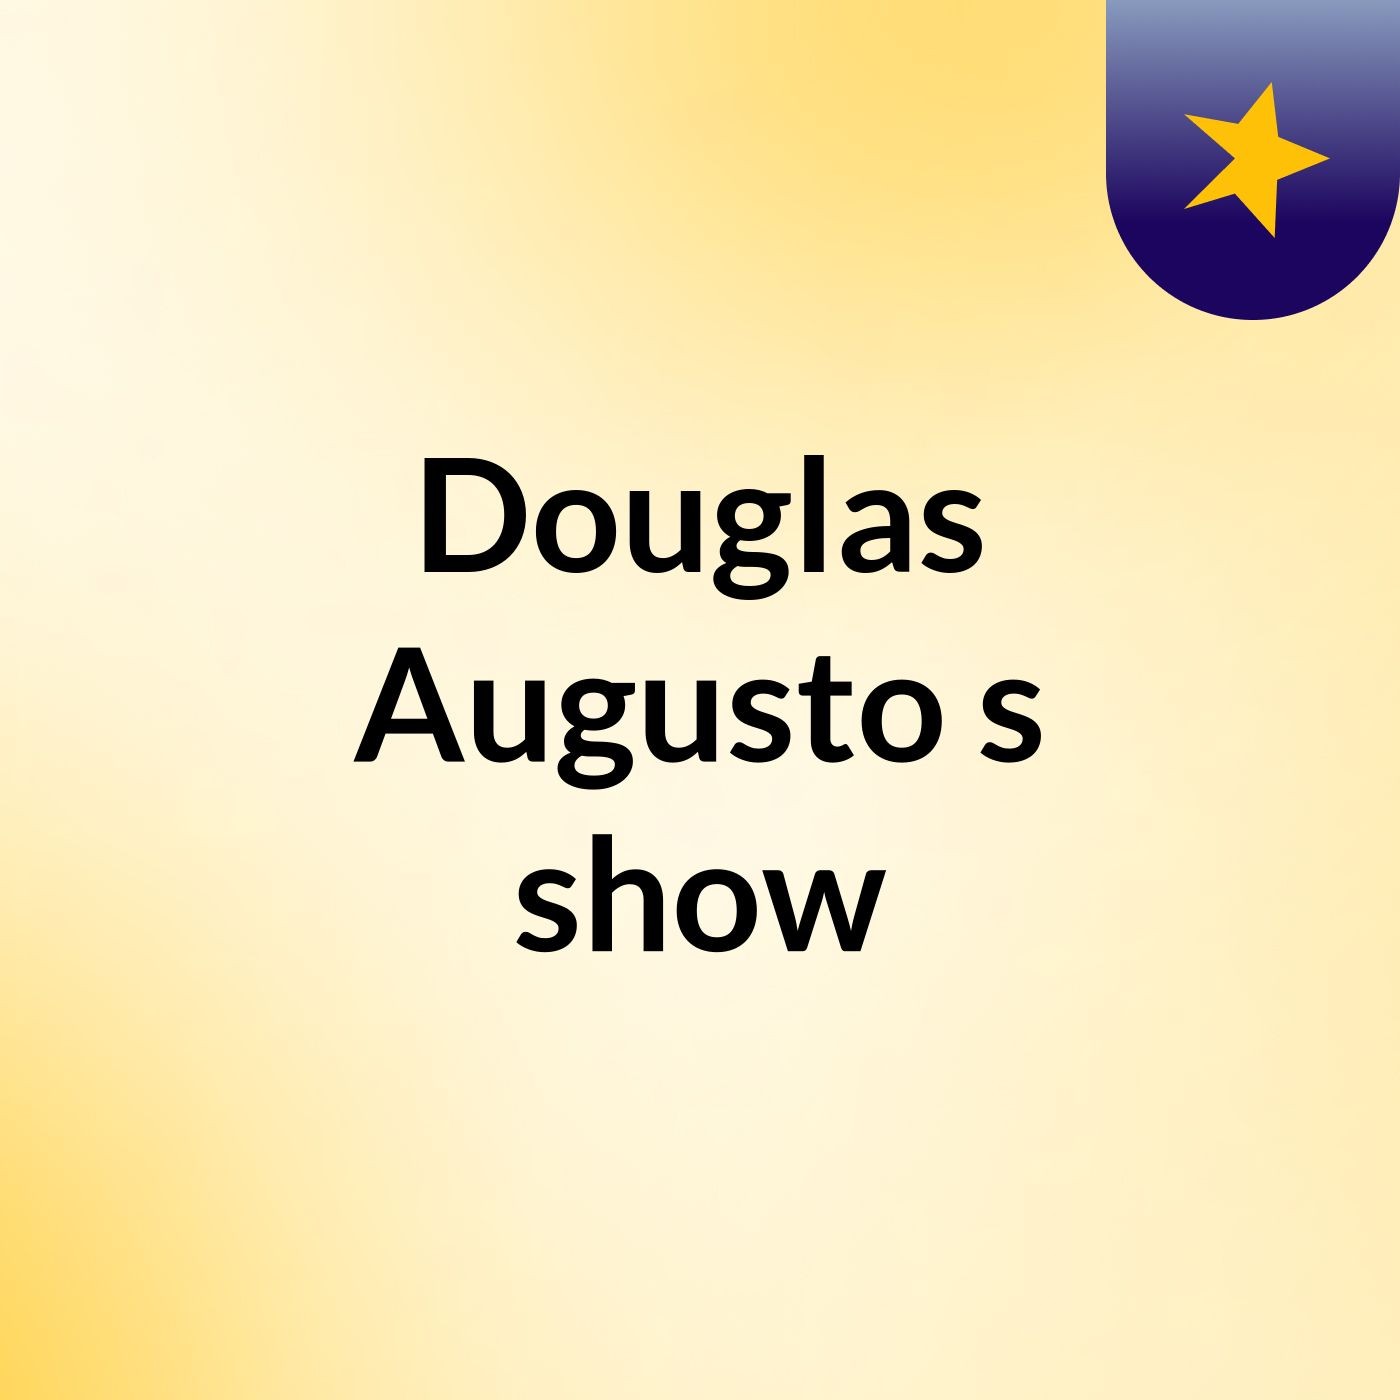 Douglas Augusto's show